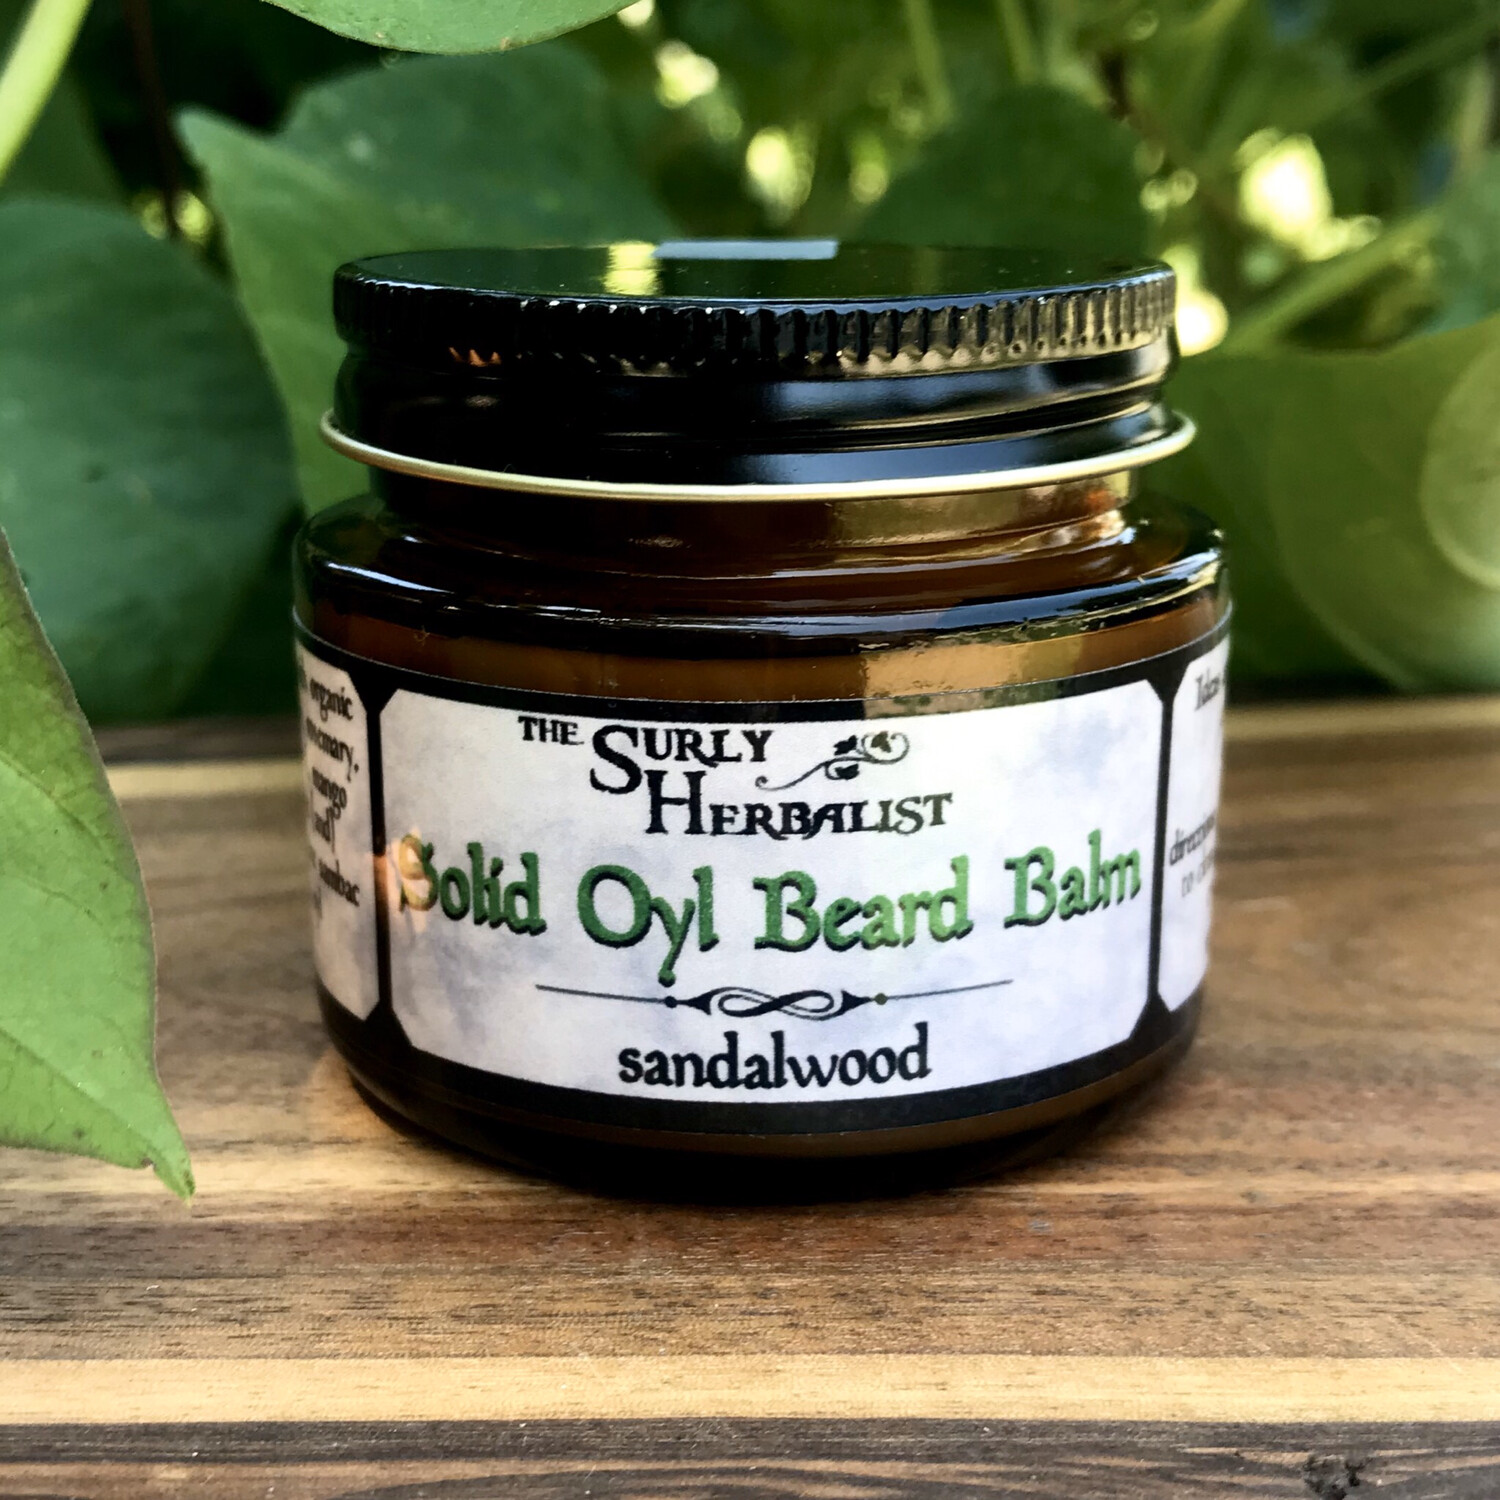 Solid Oyl Beard Balm - Sandalwood